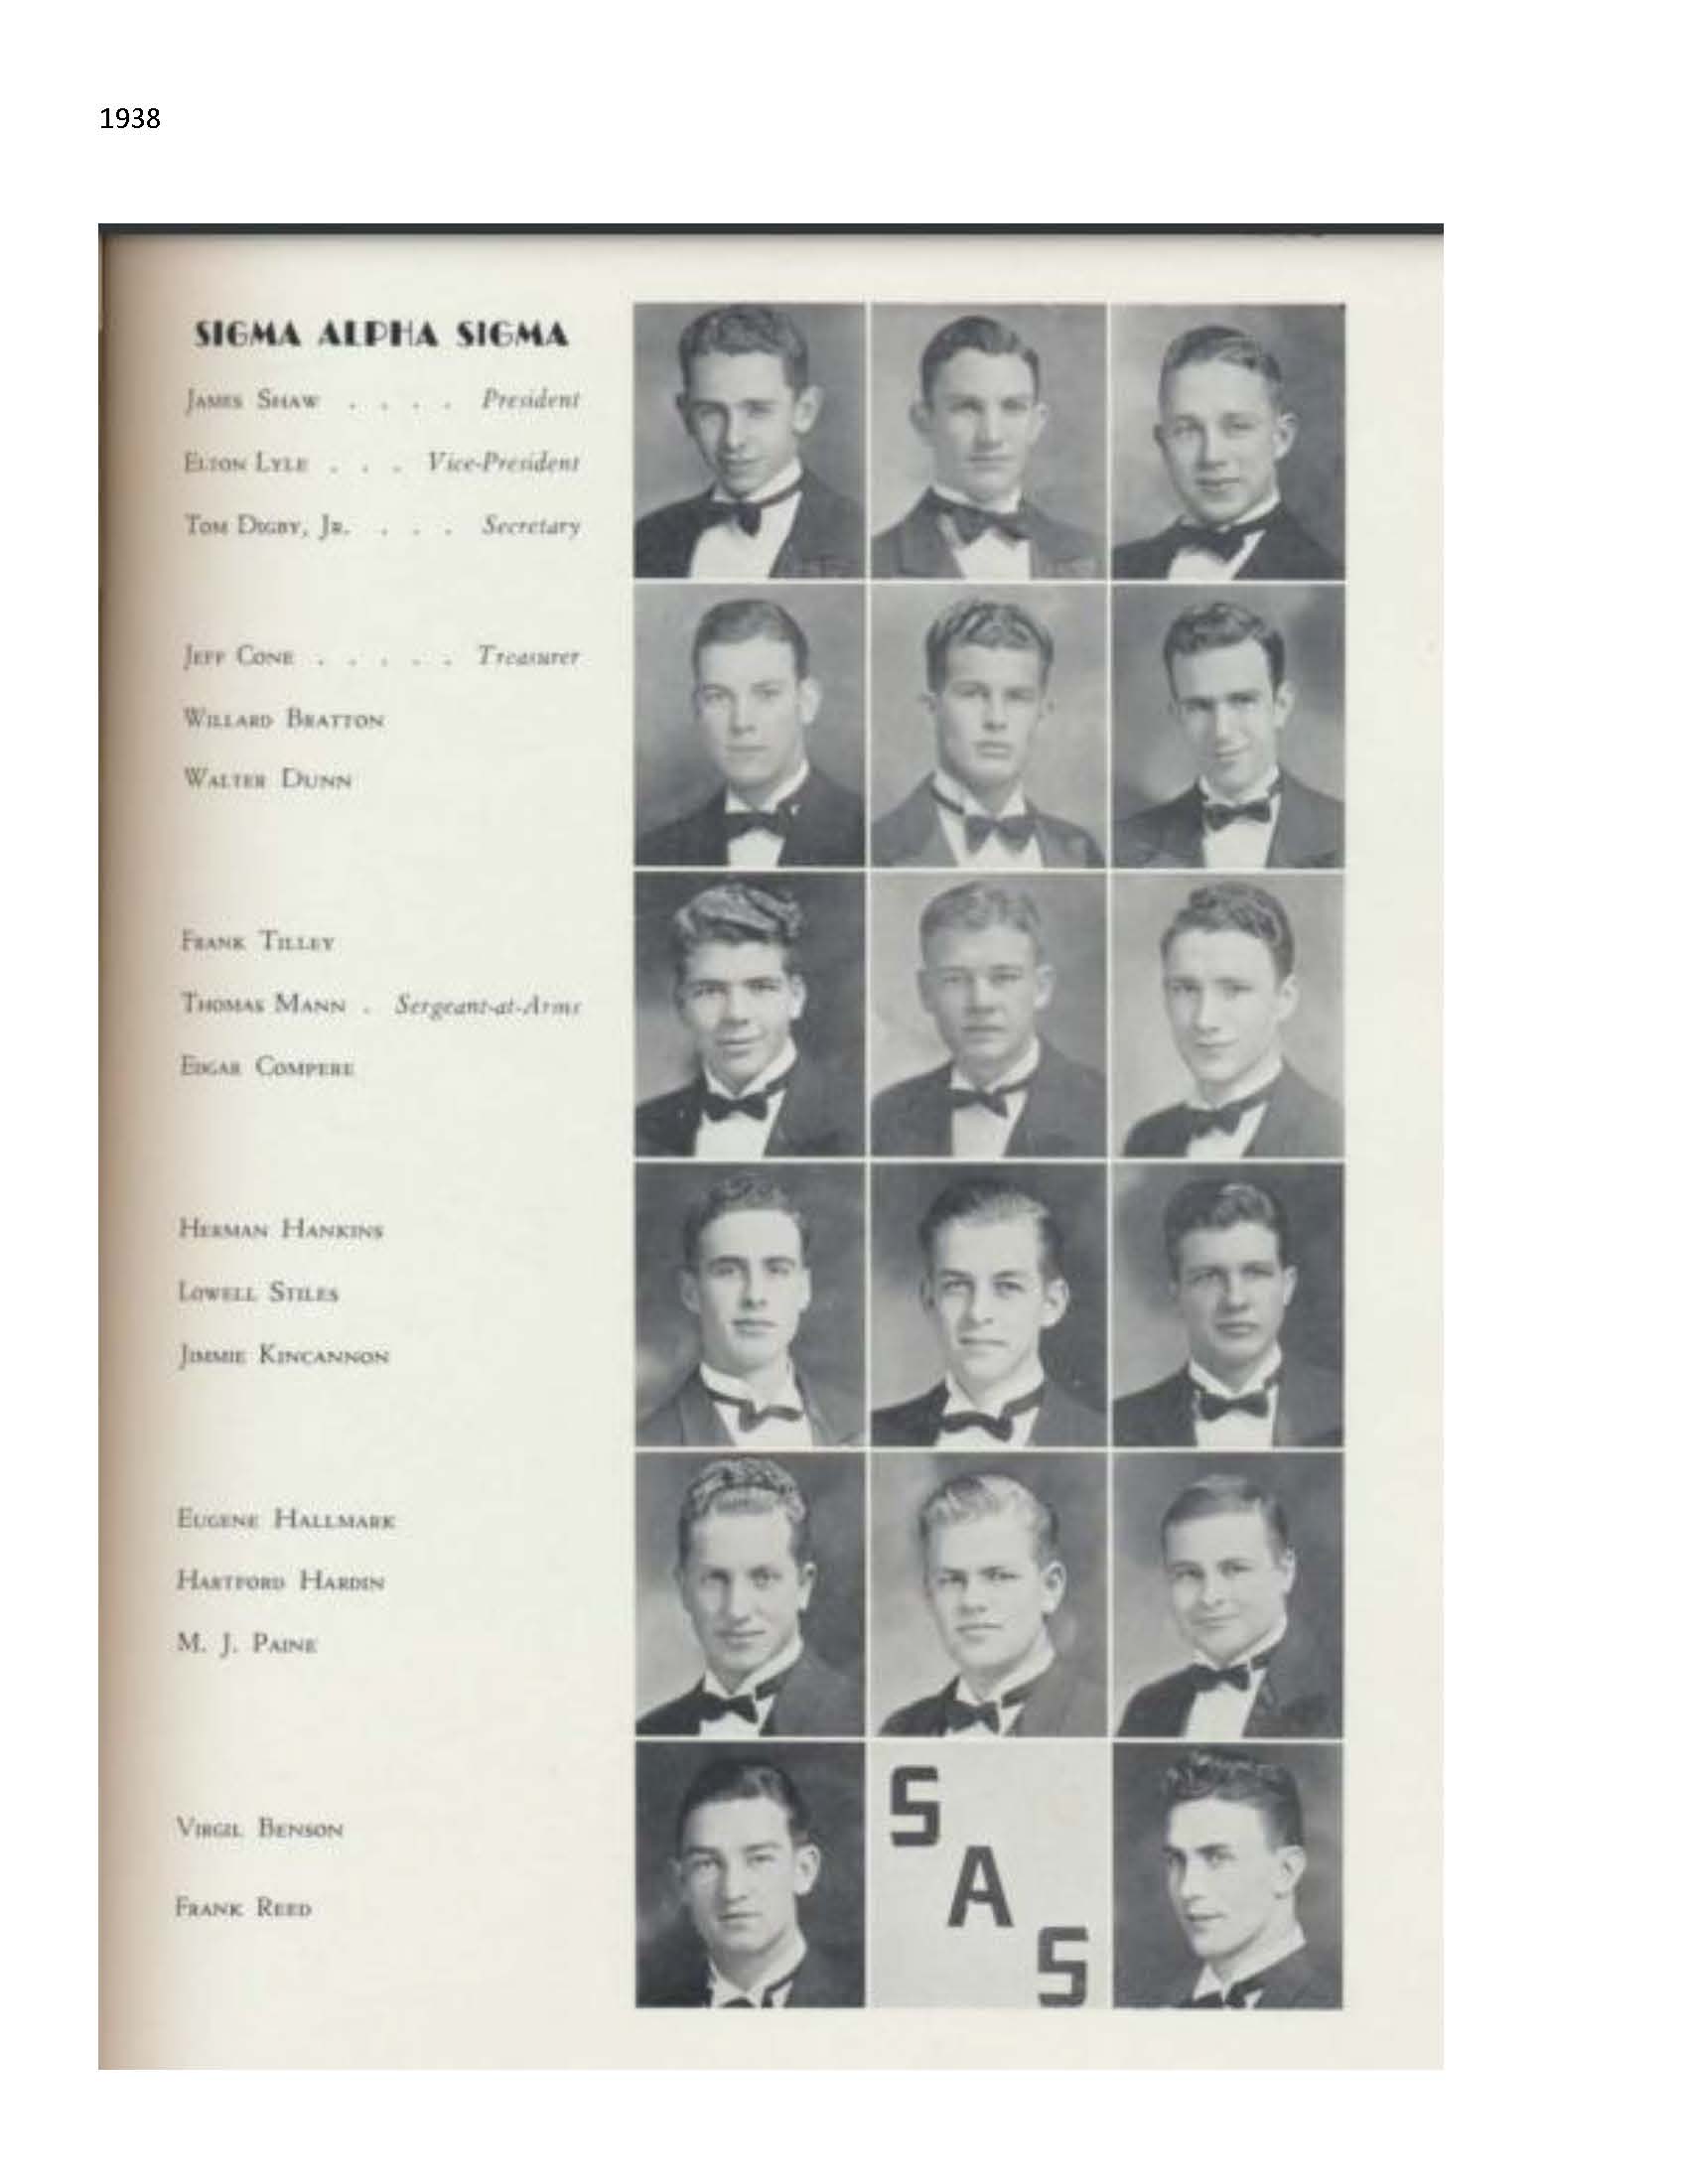 1938 Sigma Alpha Sigma Ouachita Baptist Yearbook